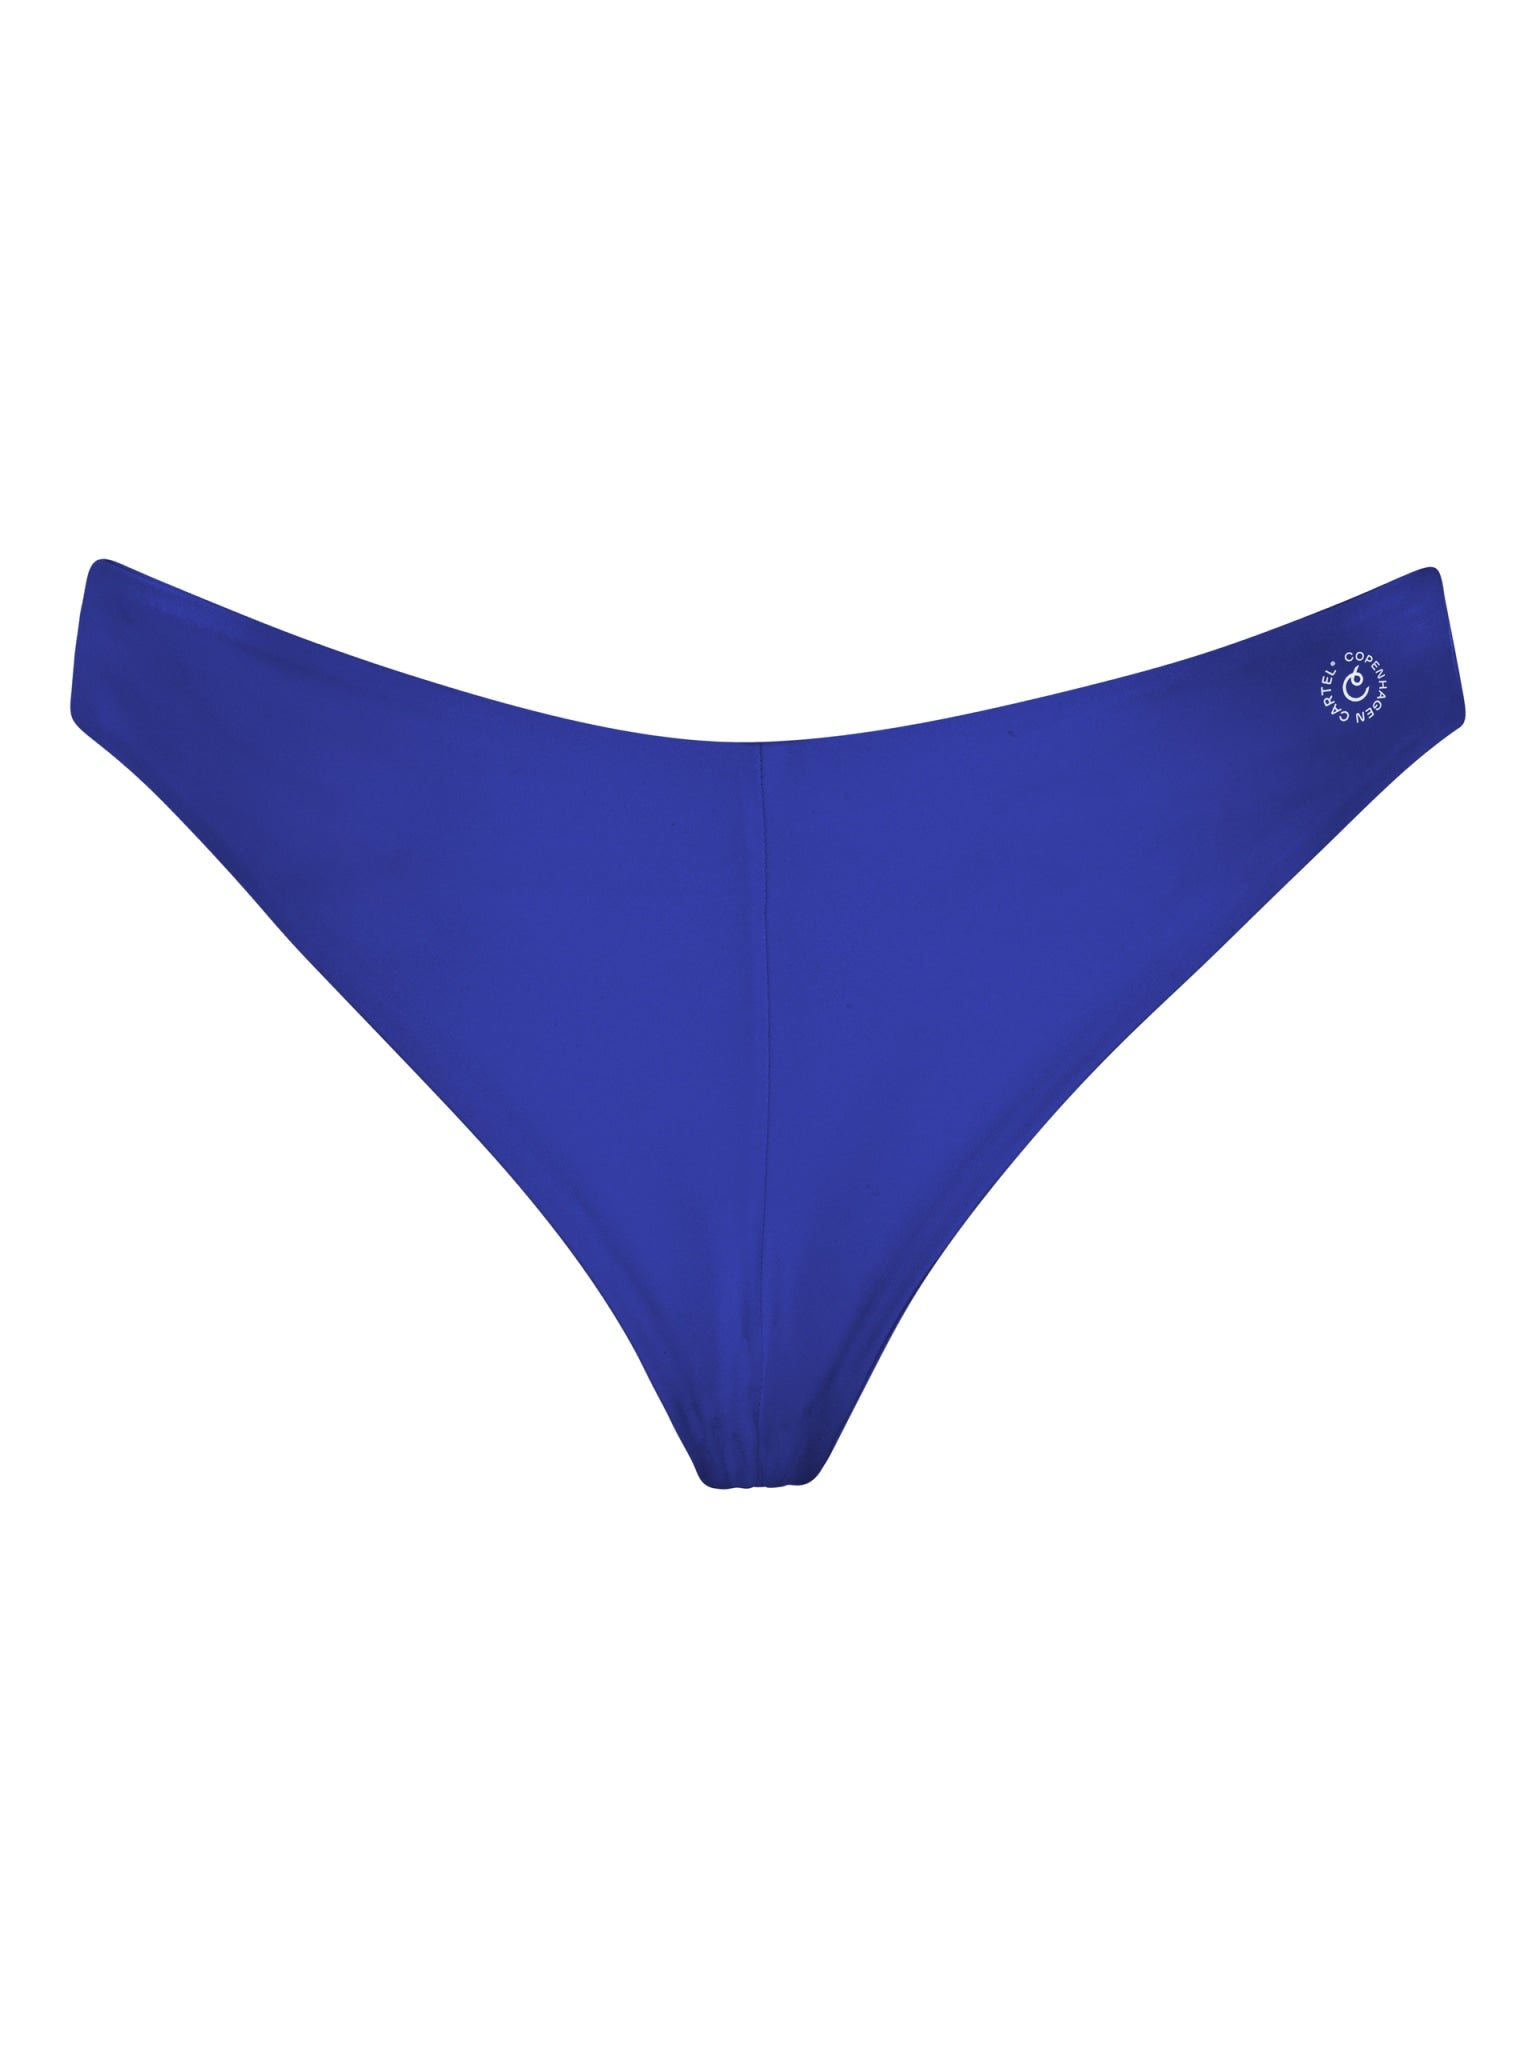 Canggu V-shaped bikini bottom - Cartel Blue